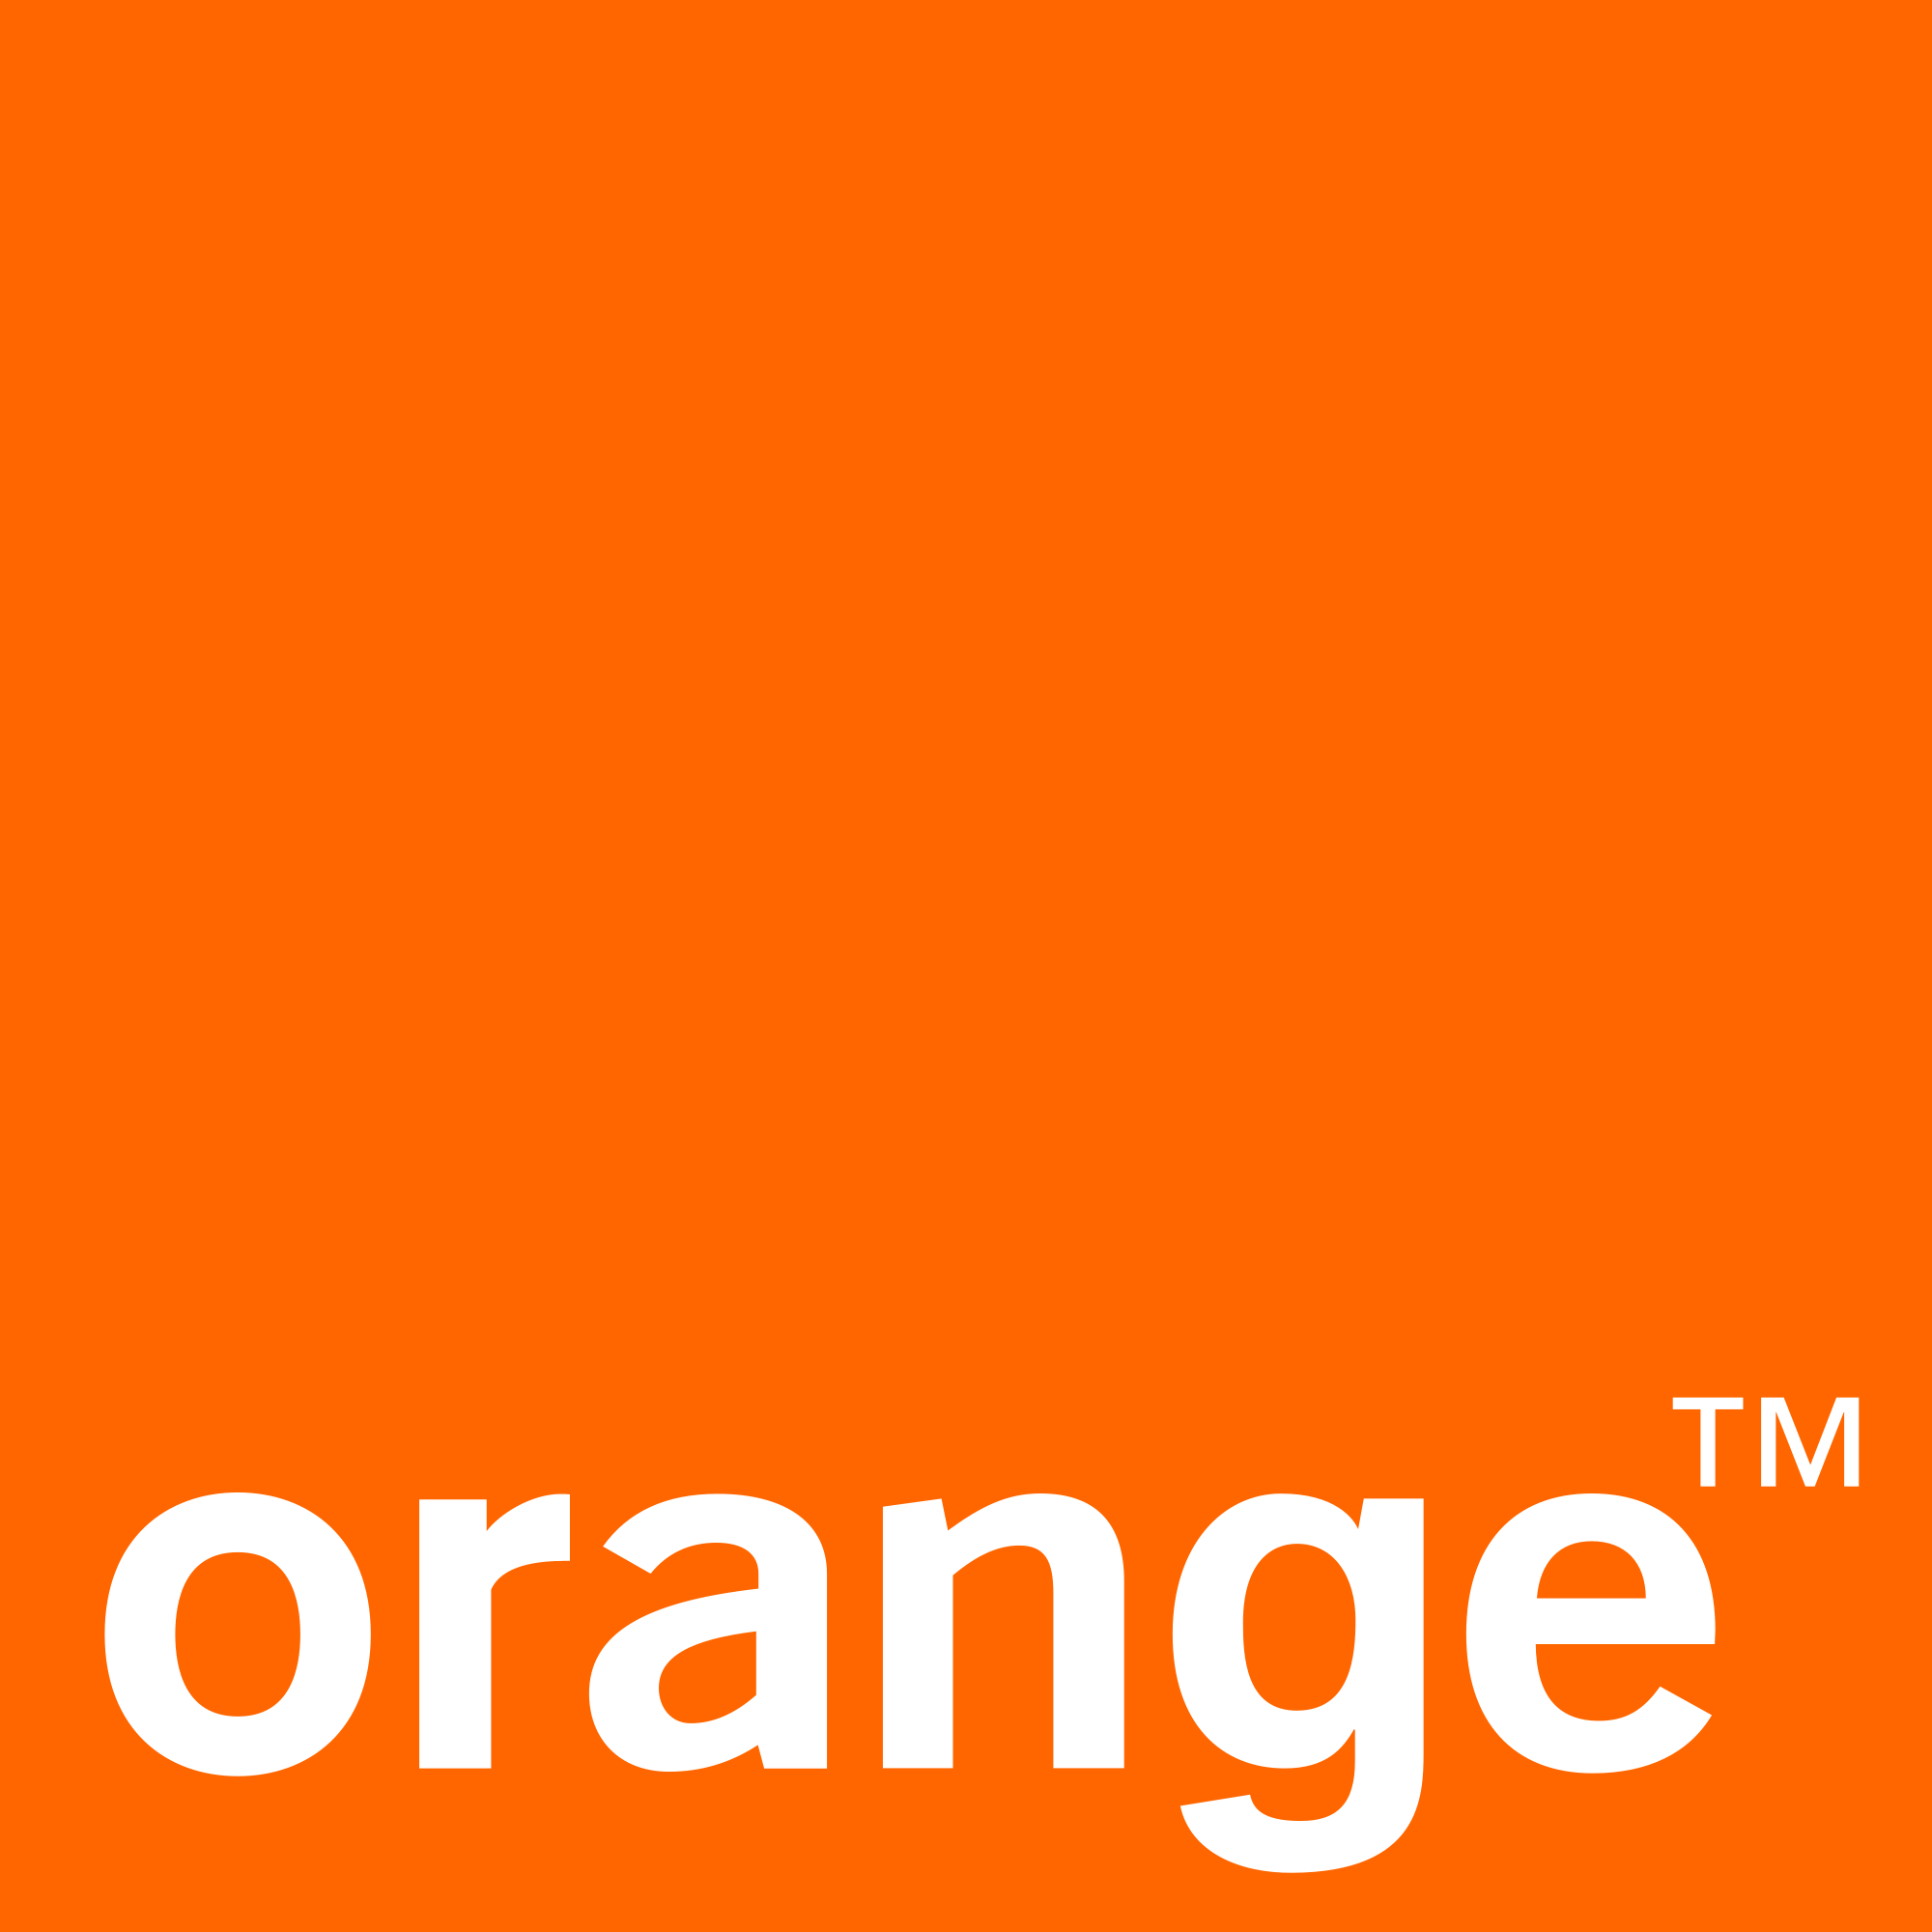 Orange الأردن توفر لزبائنها خيارات واسعة من المحتوى الترفيهي لشبكة ICFLIX على الإنترنت 